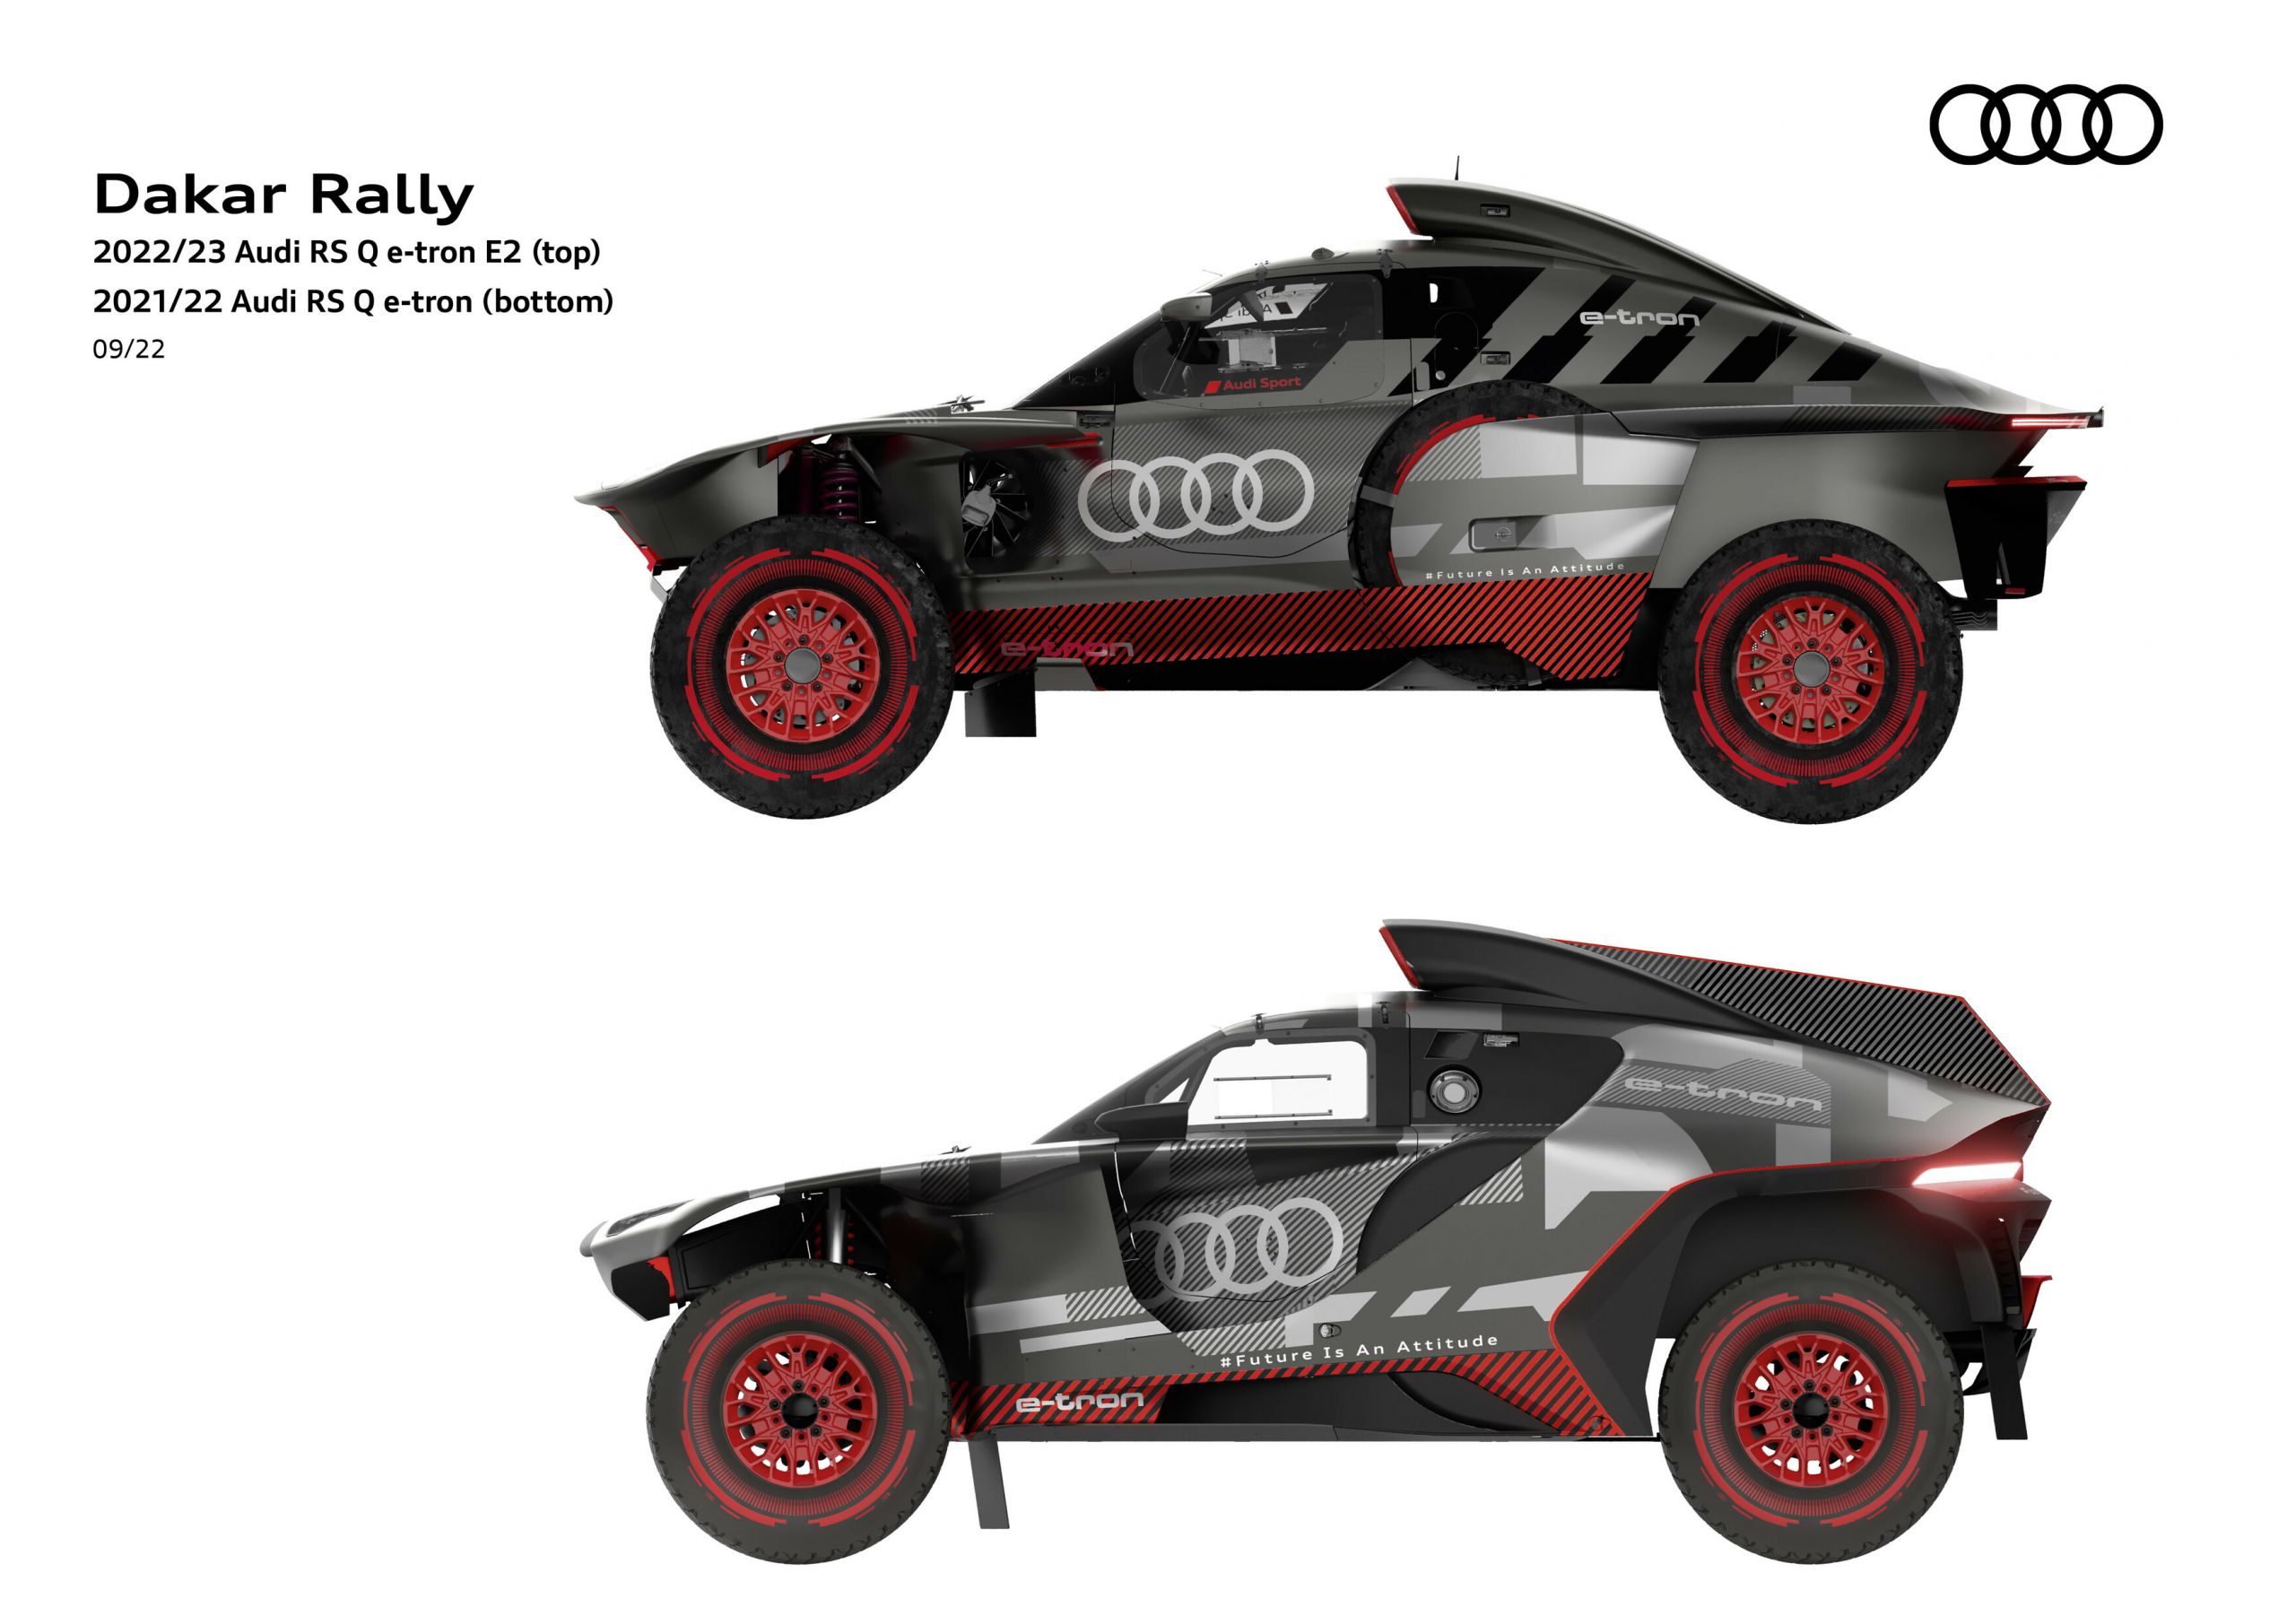 Dakar Rallly Audi RS Q e tron action side profile